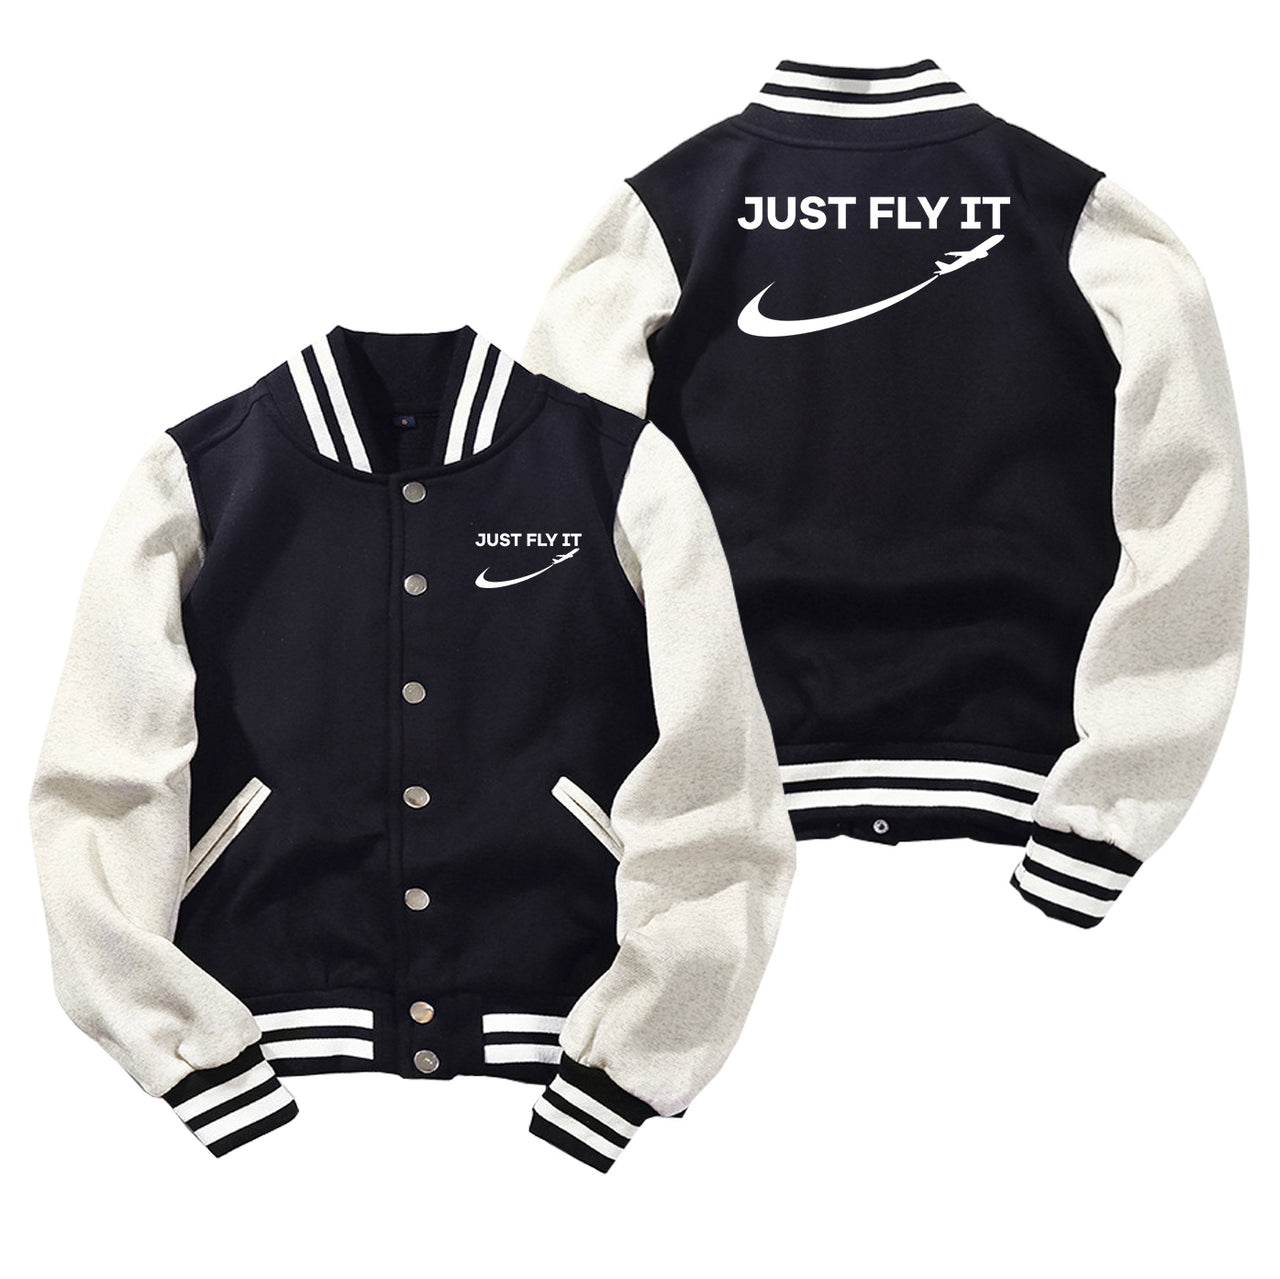 Just Fly It 2 Designed Baseball Style Jackets